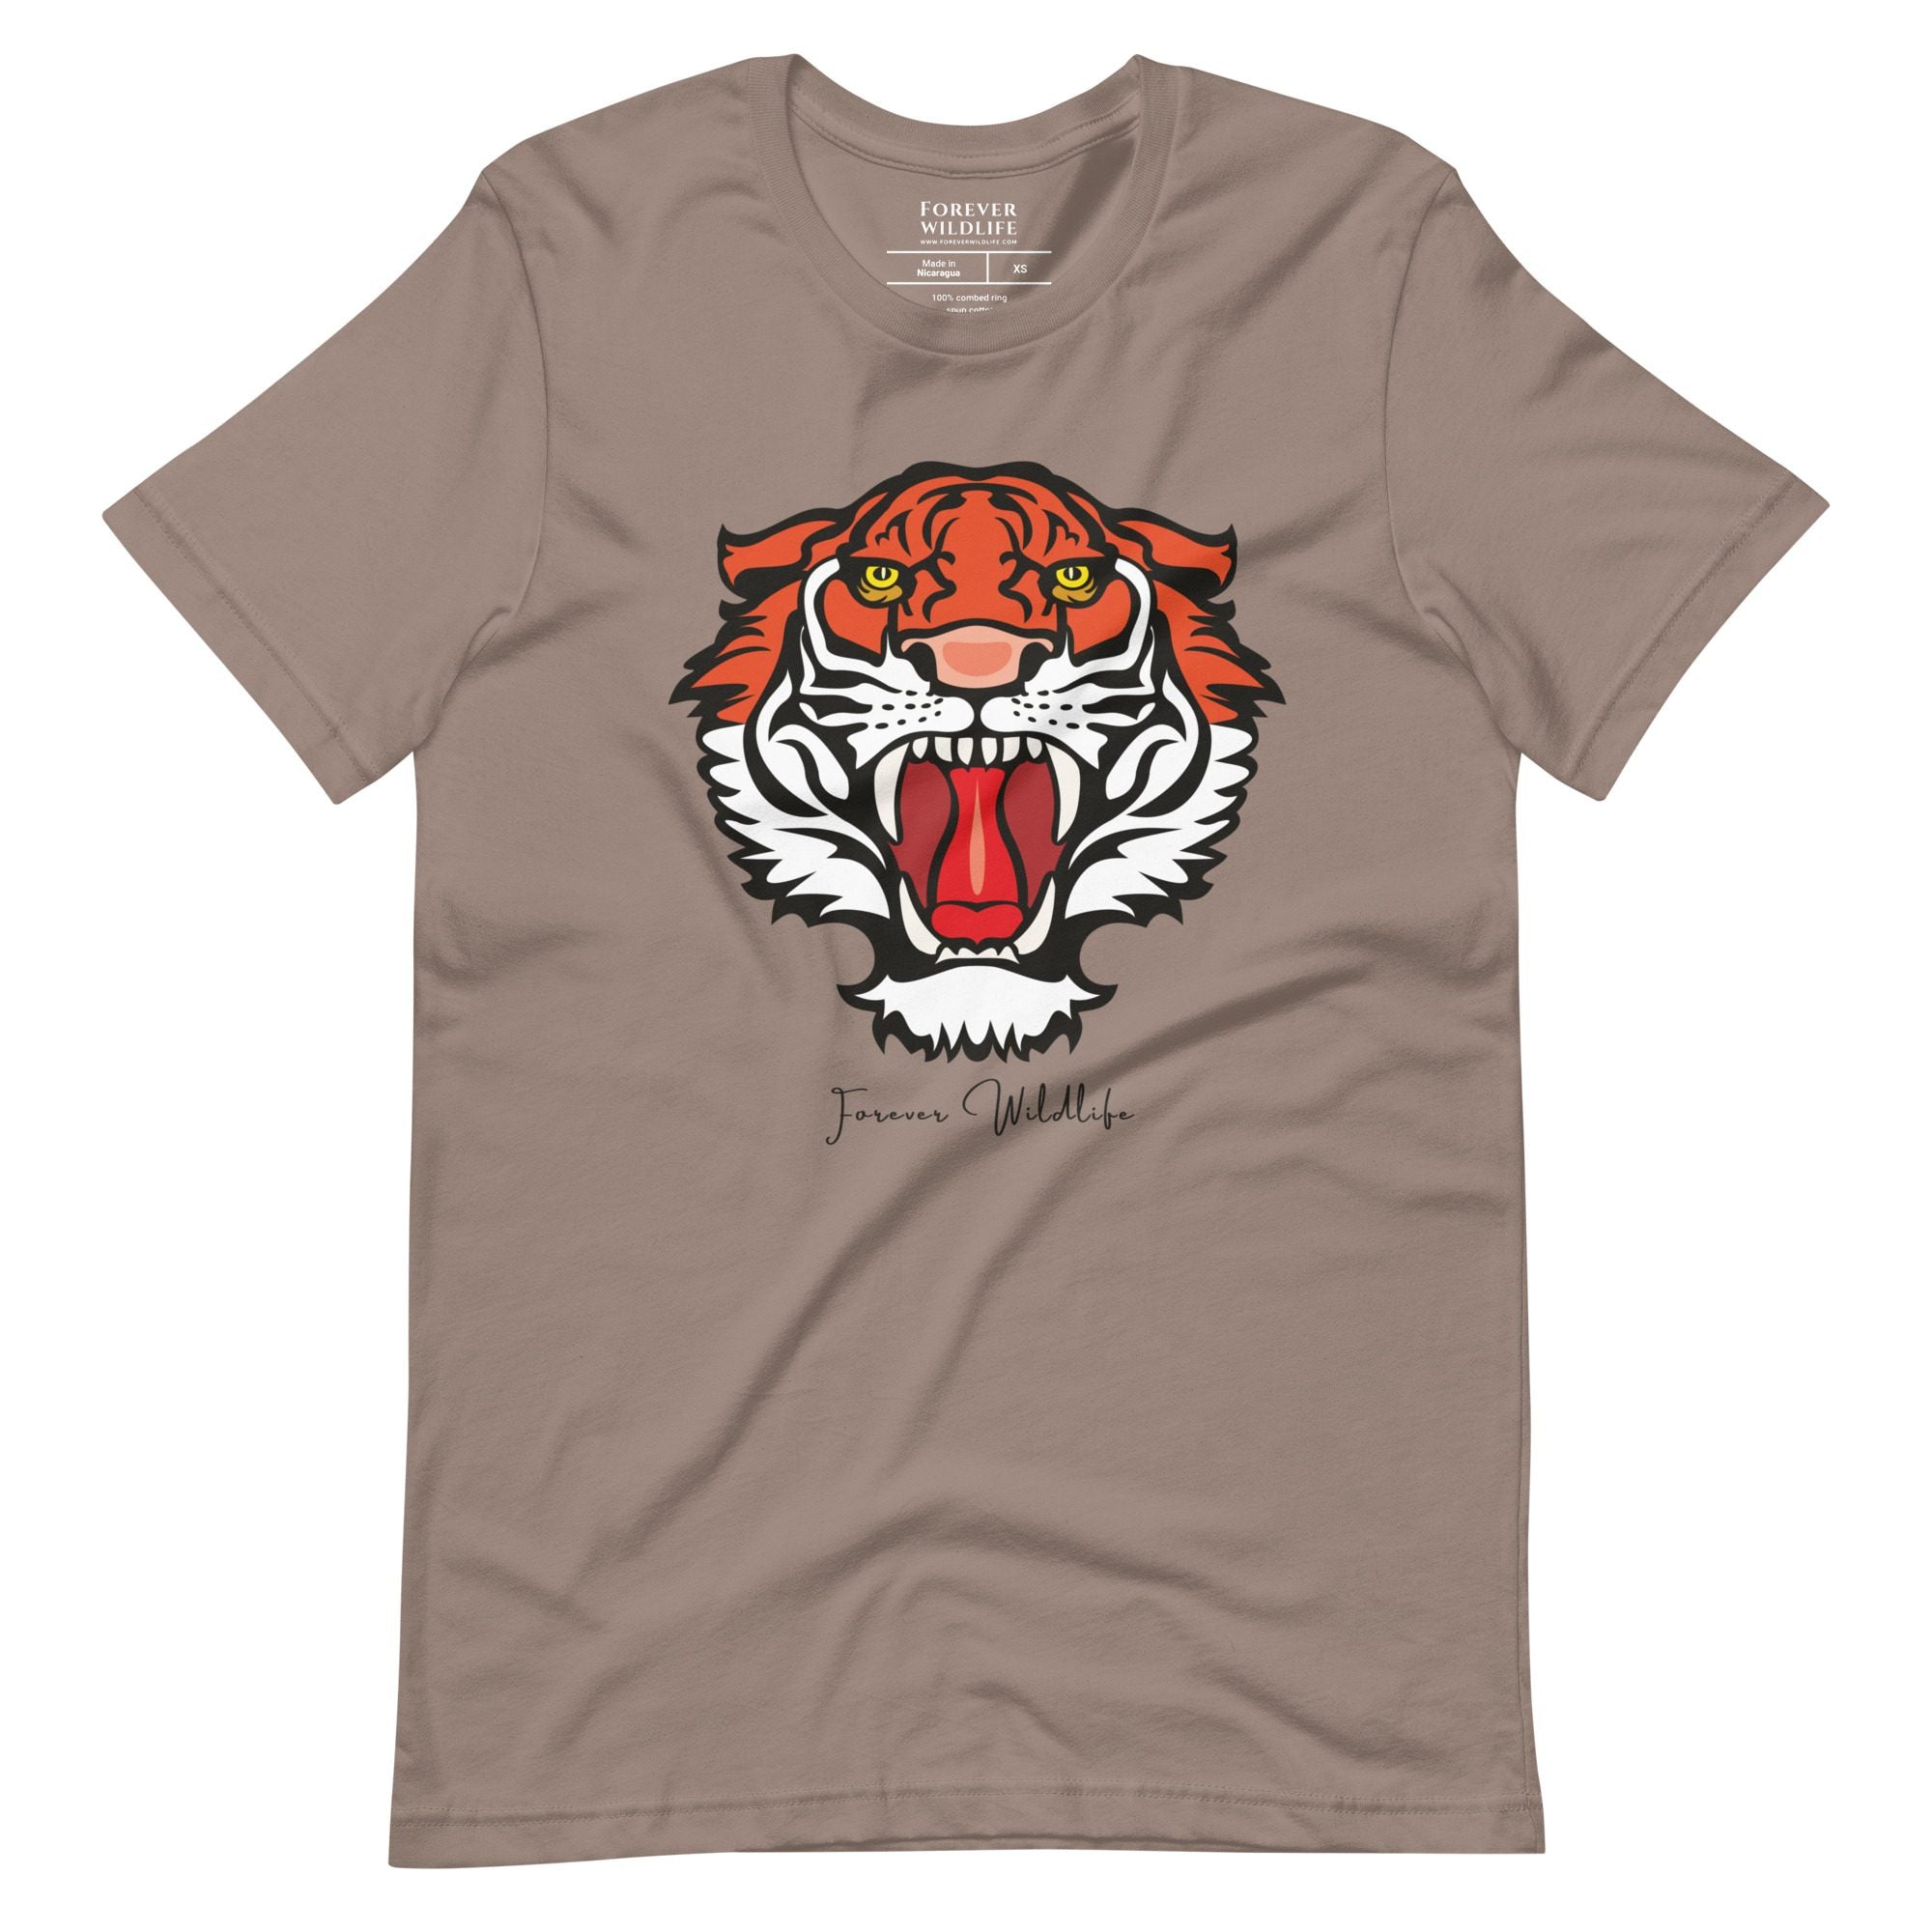 Tiger T-Shirt in Pebble – Premium Wildlife T-Shirt Design, Wildlife Apparel from Forever Wildlife